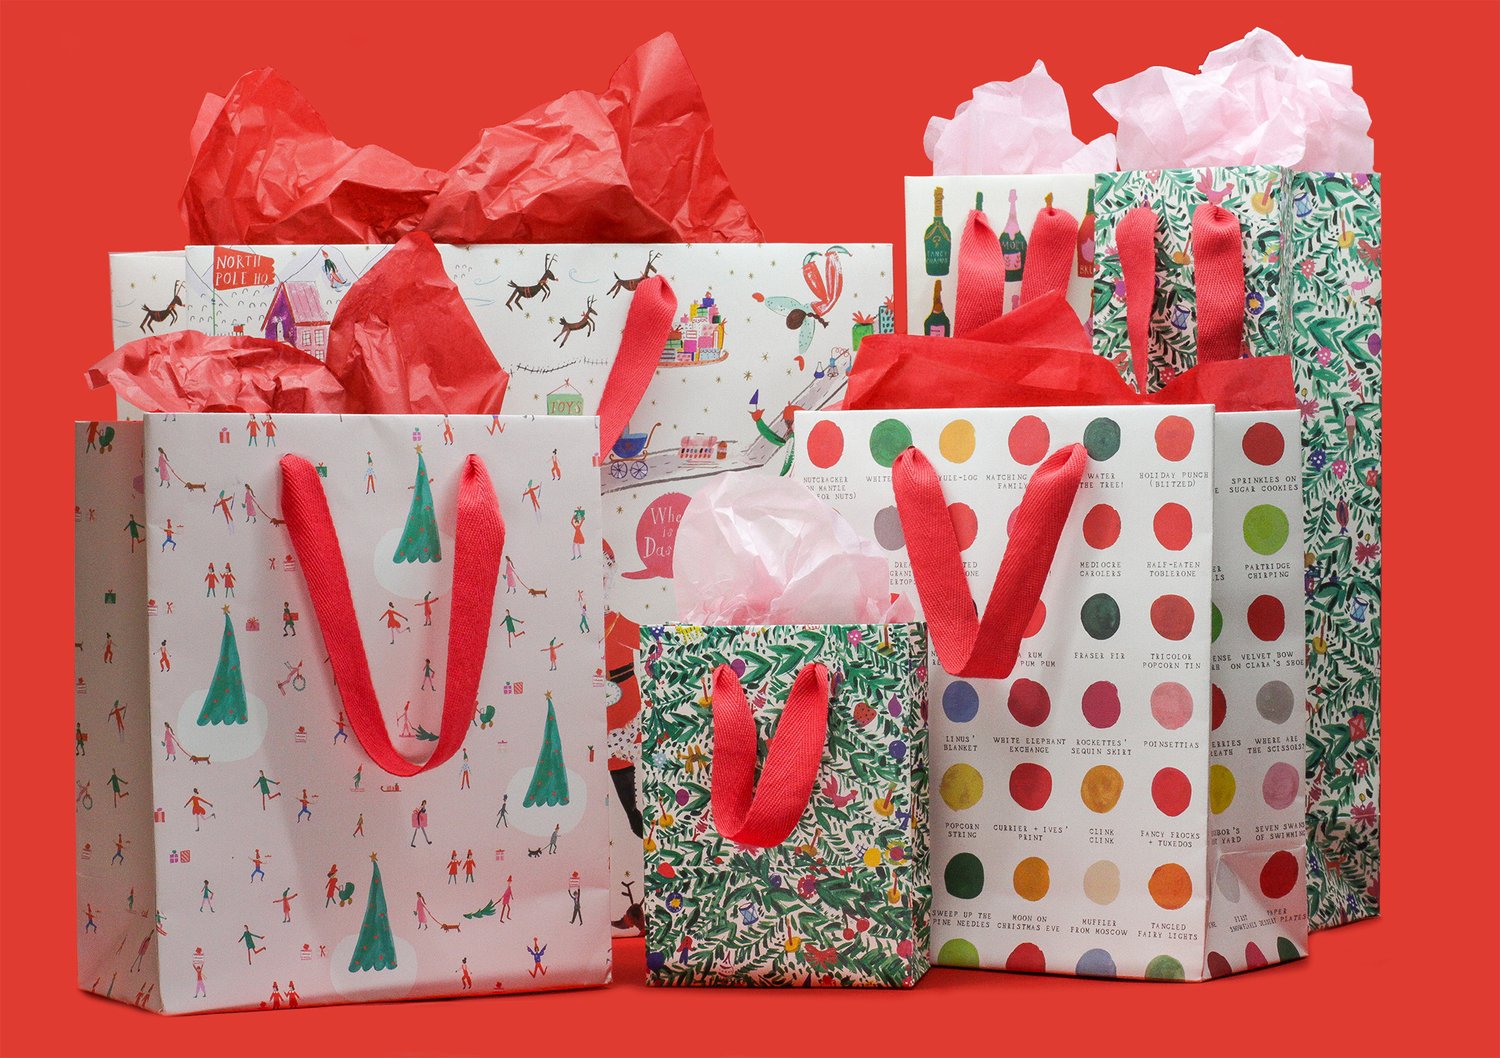 Wrapping Paper: Pink Parisian Bows gift Wrap, Birthday, Holiday, Christmas  